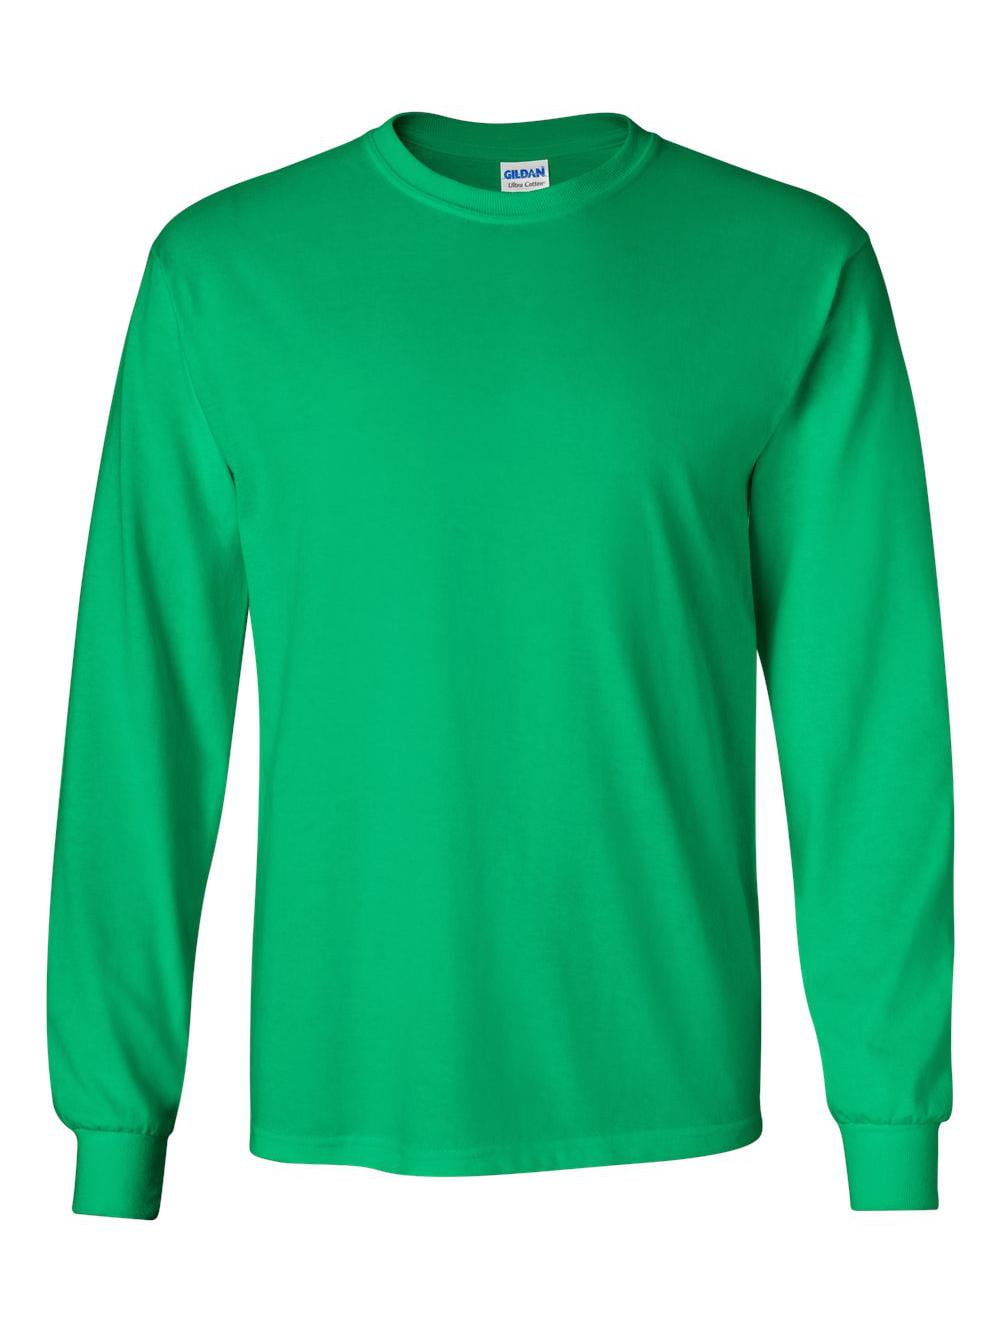 Style G2400 Gildan Mens Ultra Cotton Long Sleeve T-Shirt 2-Pack